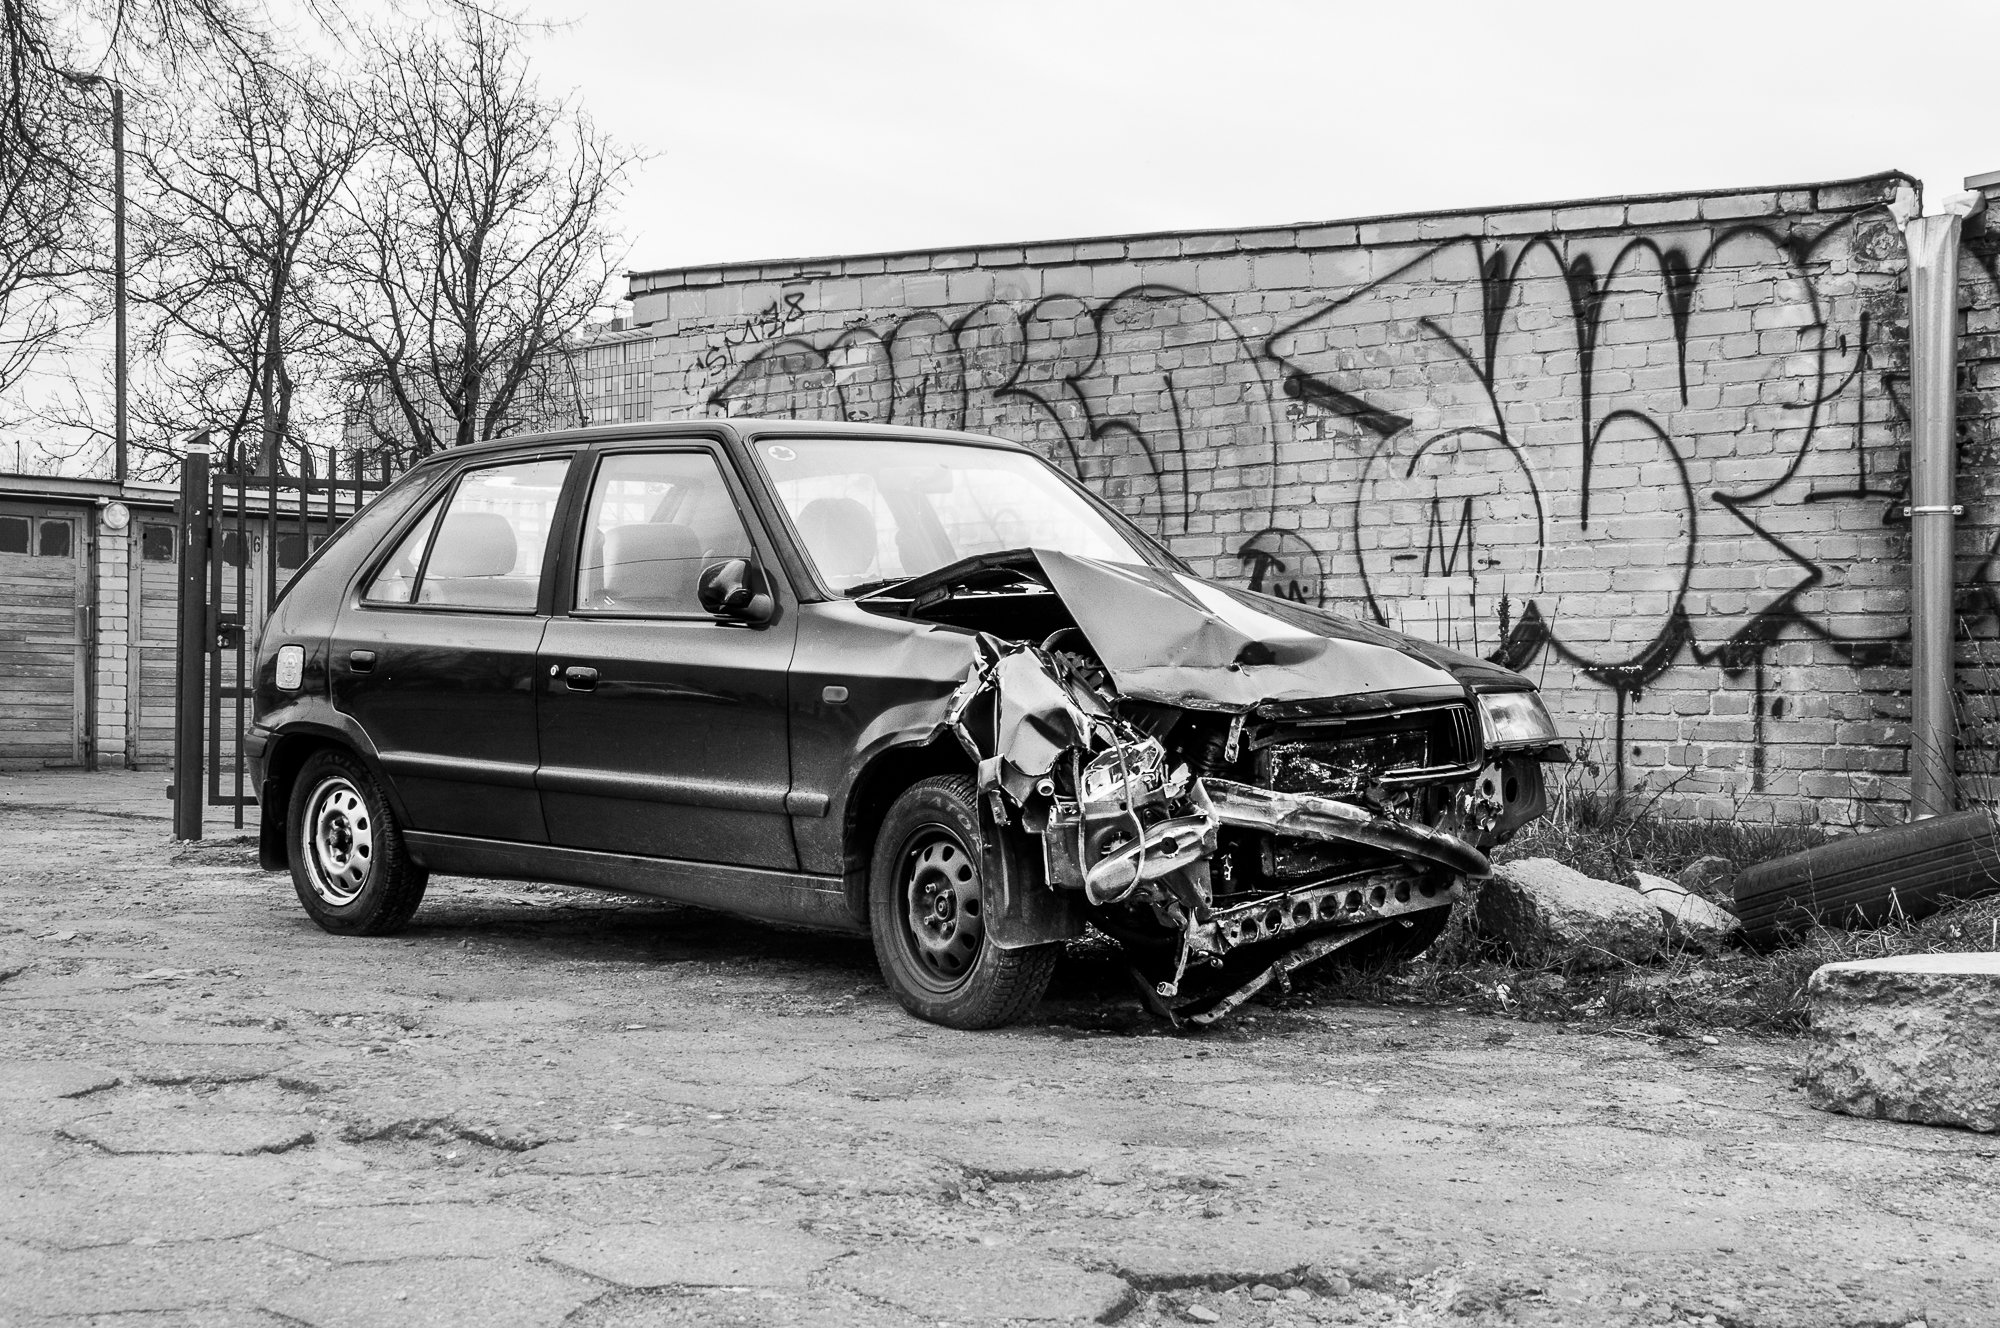 Adam Mazek Photography Warsaw (Warszawa) 2020. Post: "Photography as a business." Minimalism. Crashed car.